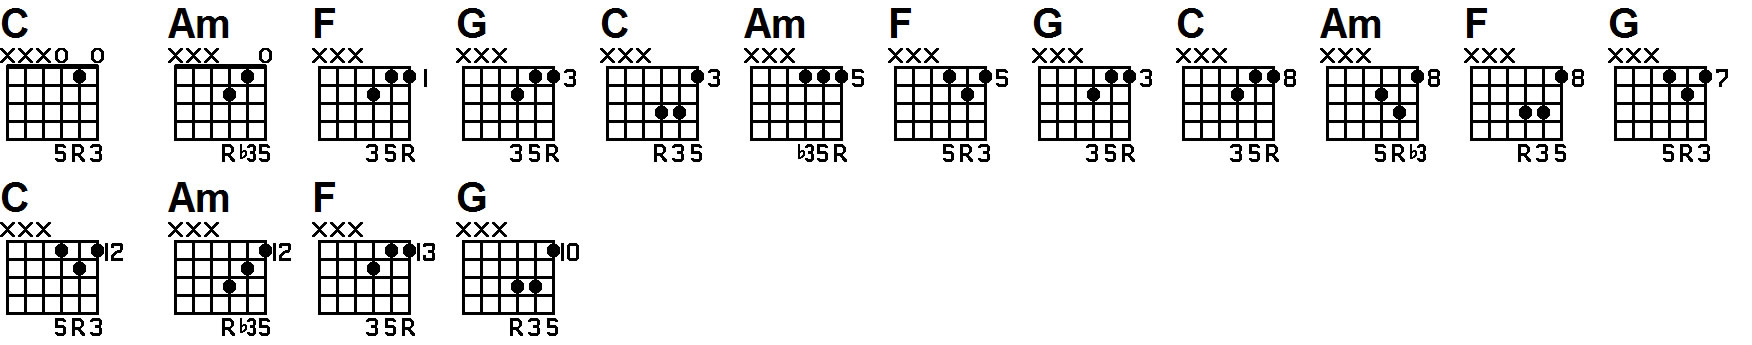 guitar lesson on triad 1645 chords